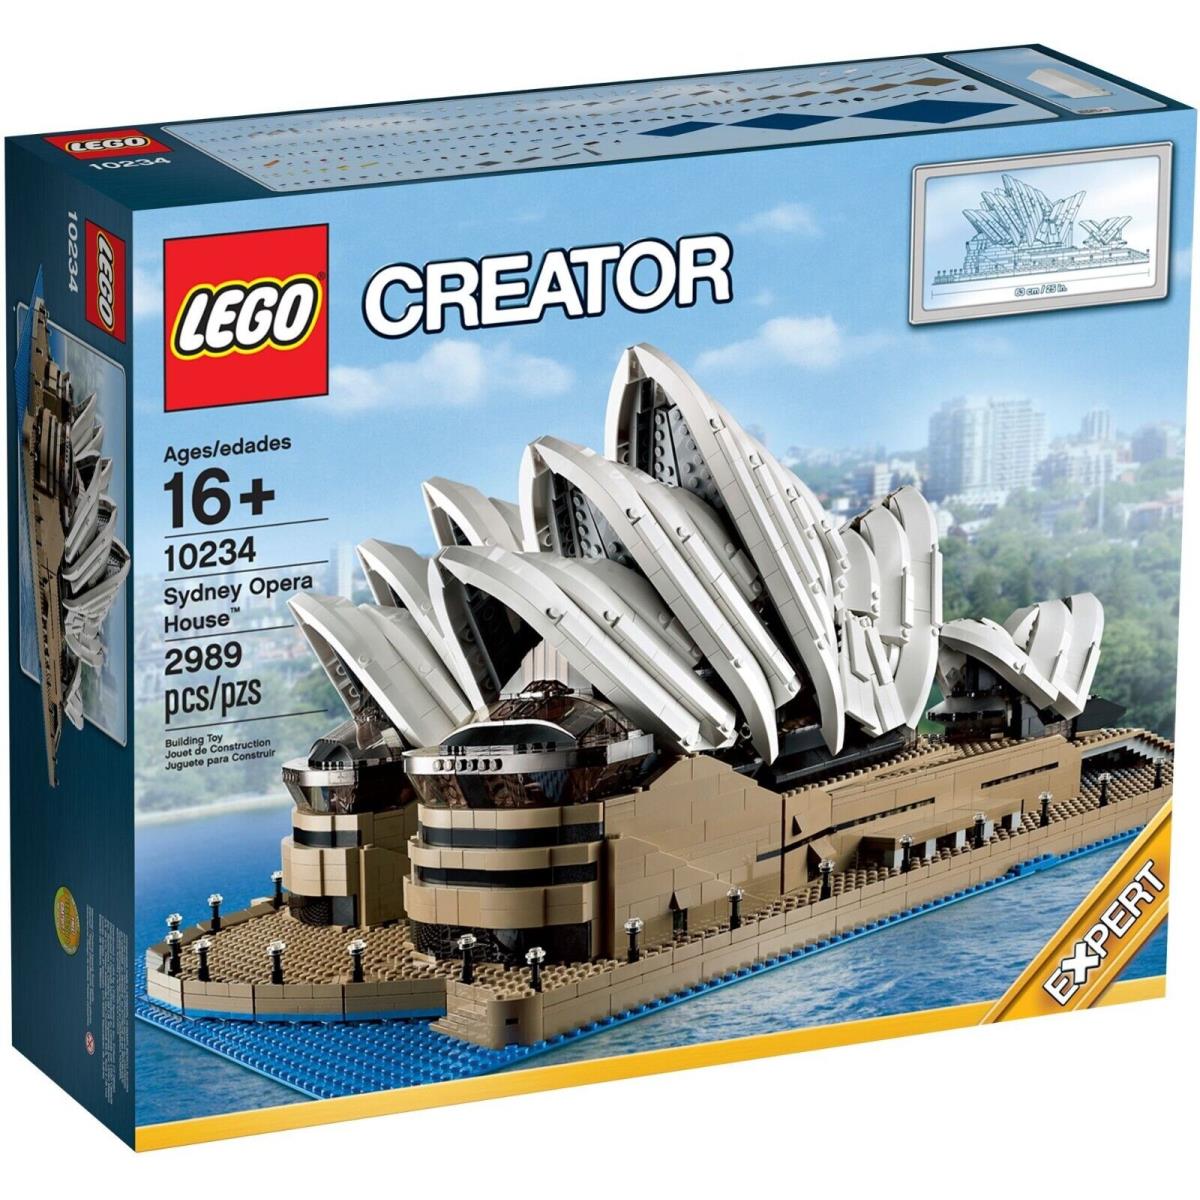 Lego Creator 10234 Sydney Opera House Retired Building Set